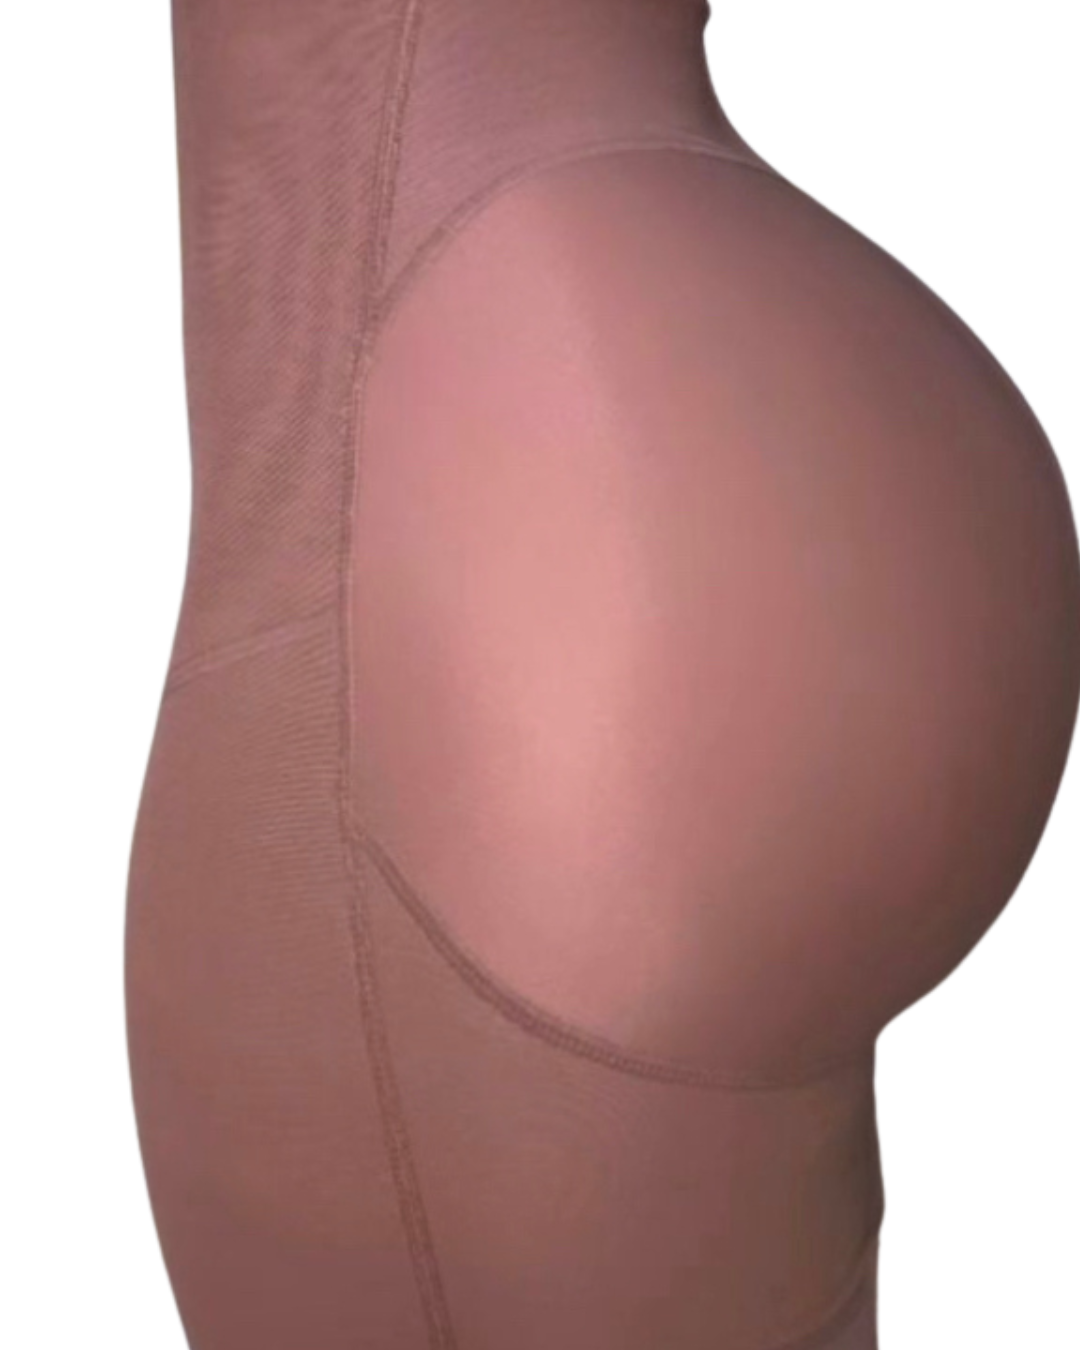 Stage 1 Compression Bundle: Option 1 (Full body mid thigh faja